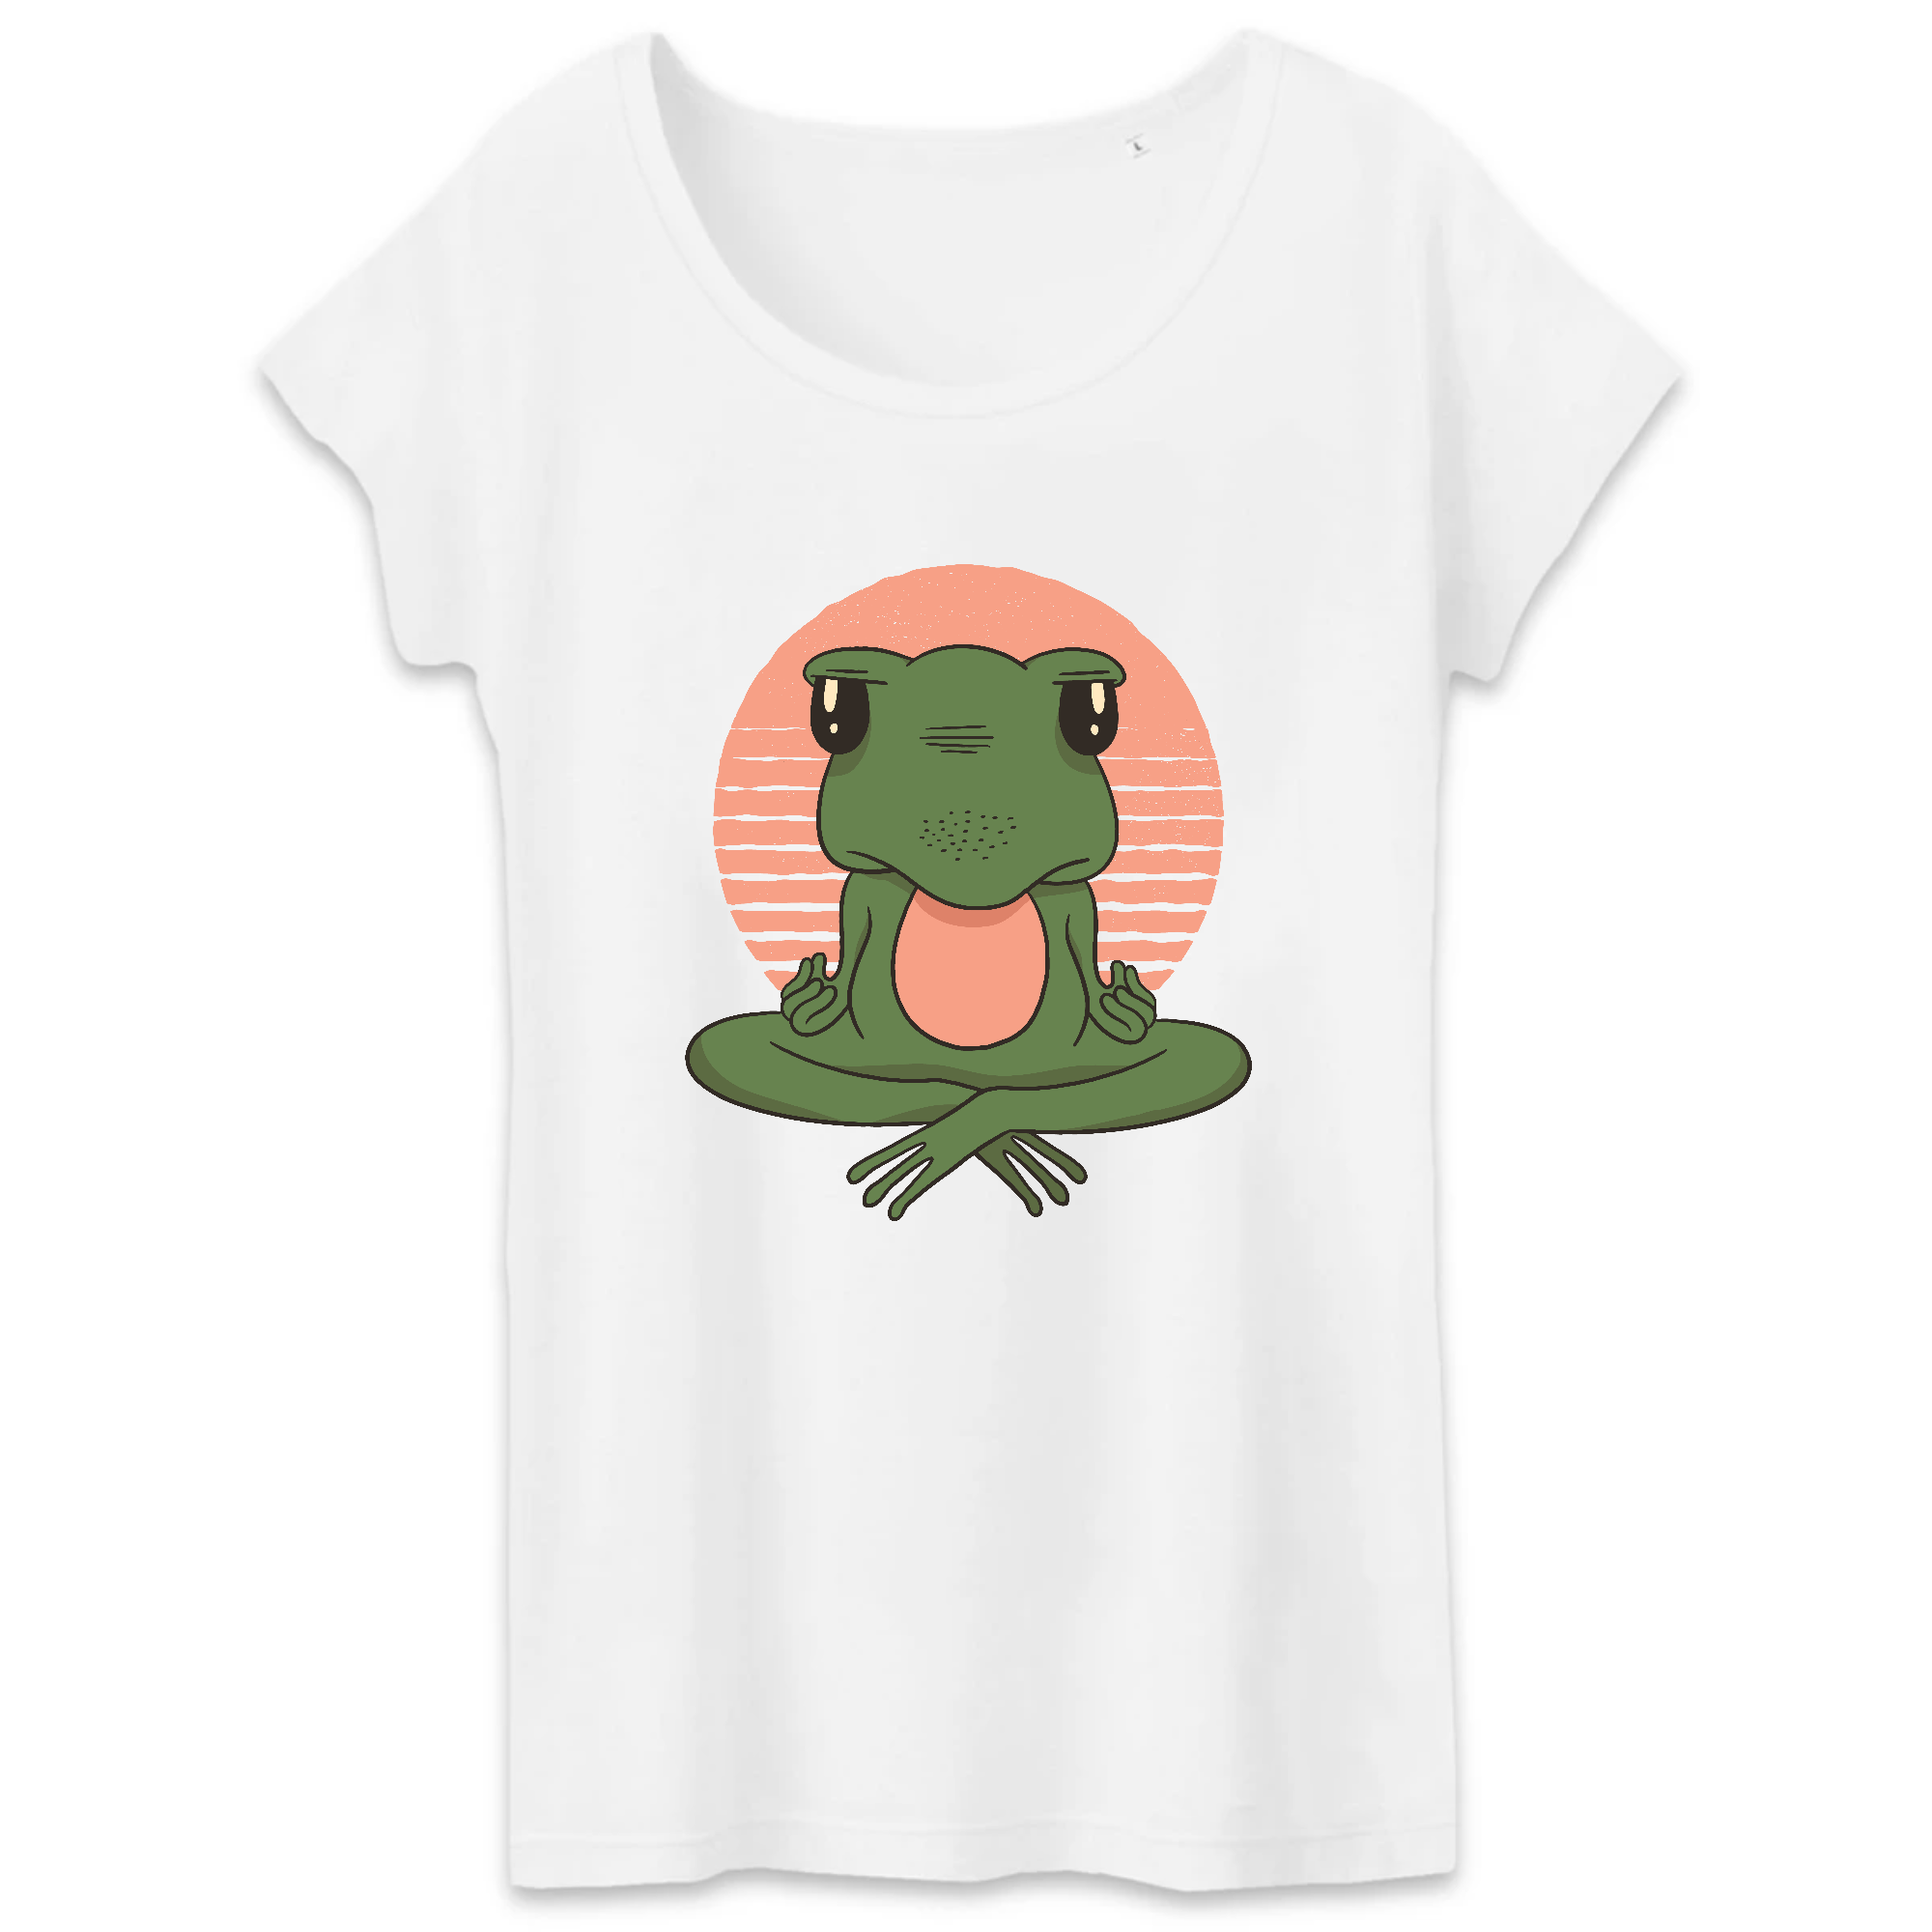 T-shirt Bio-Frog Yoga Vintage Mesdames